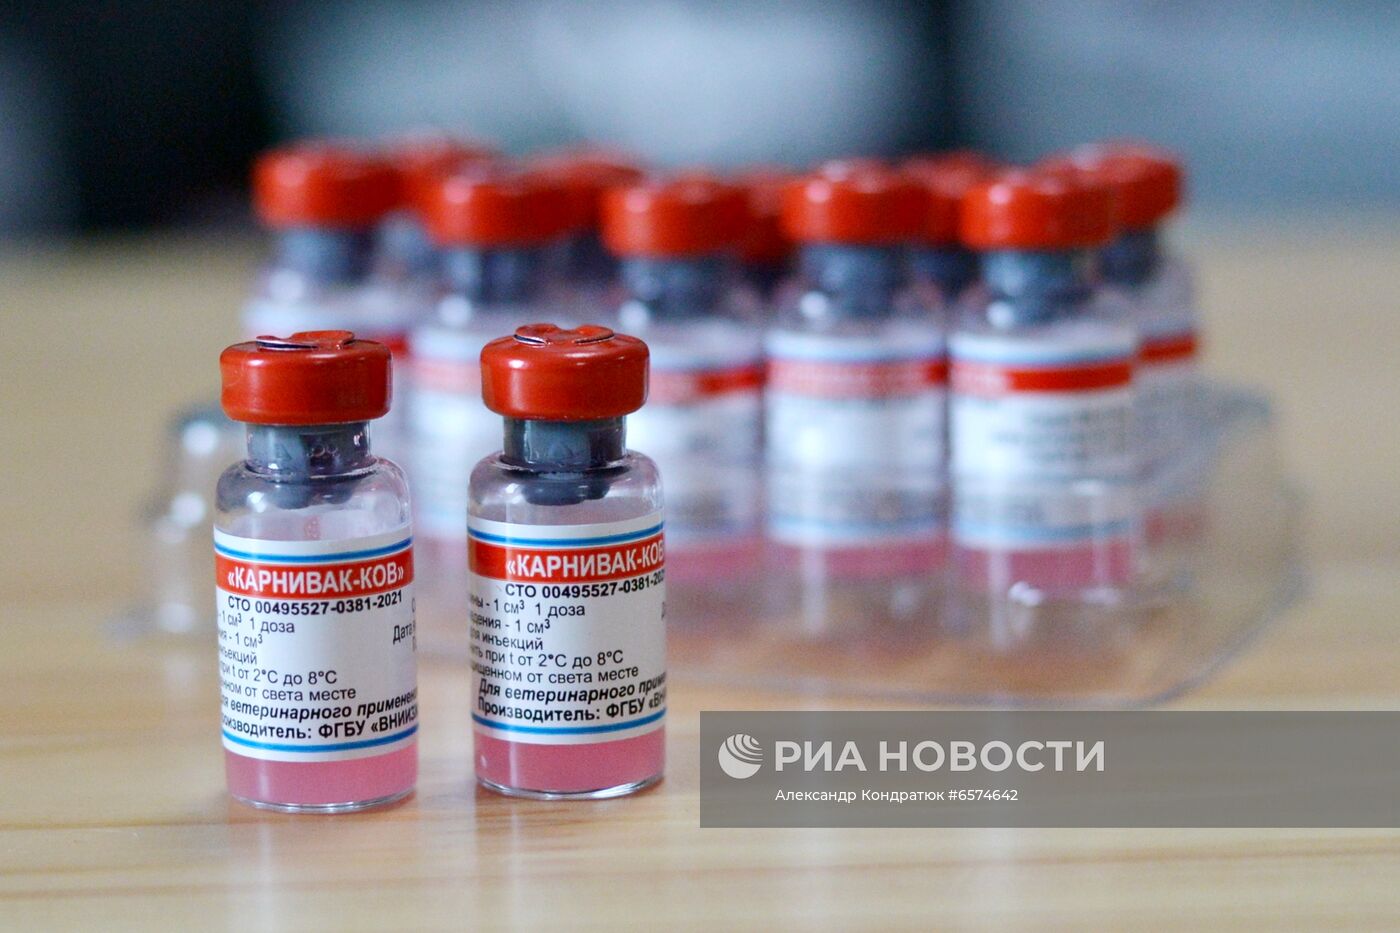 Вакцинация домашних животных от COVID-19 в Челябинске